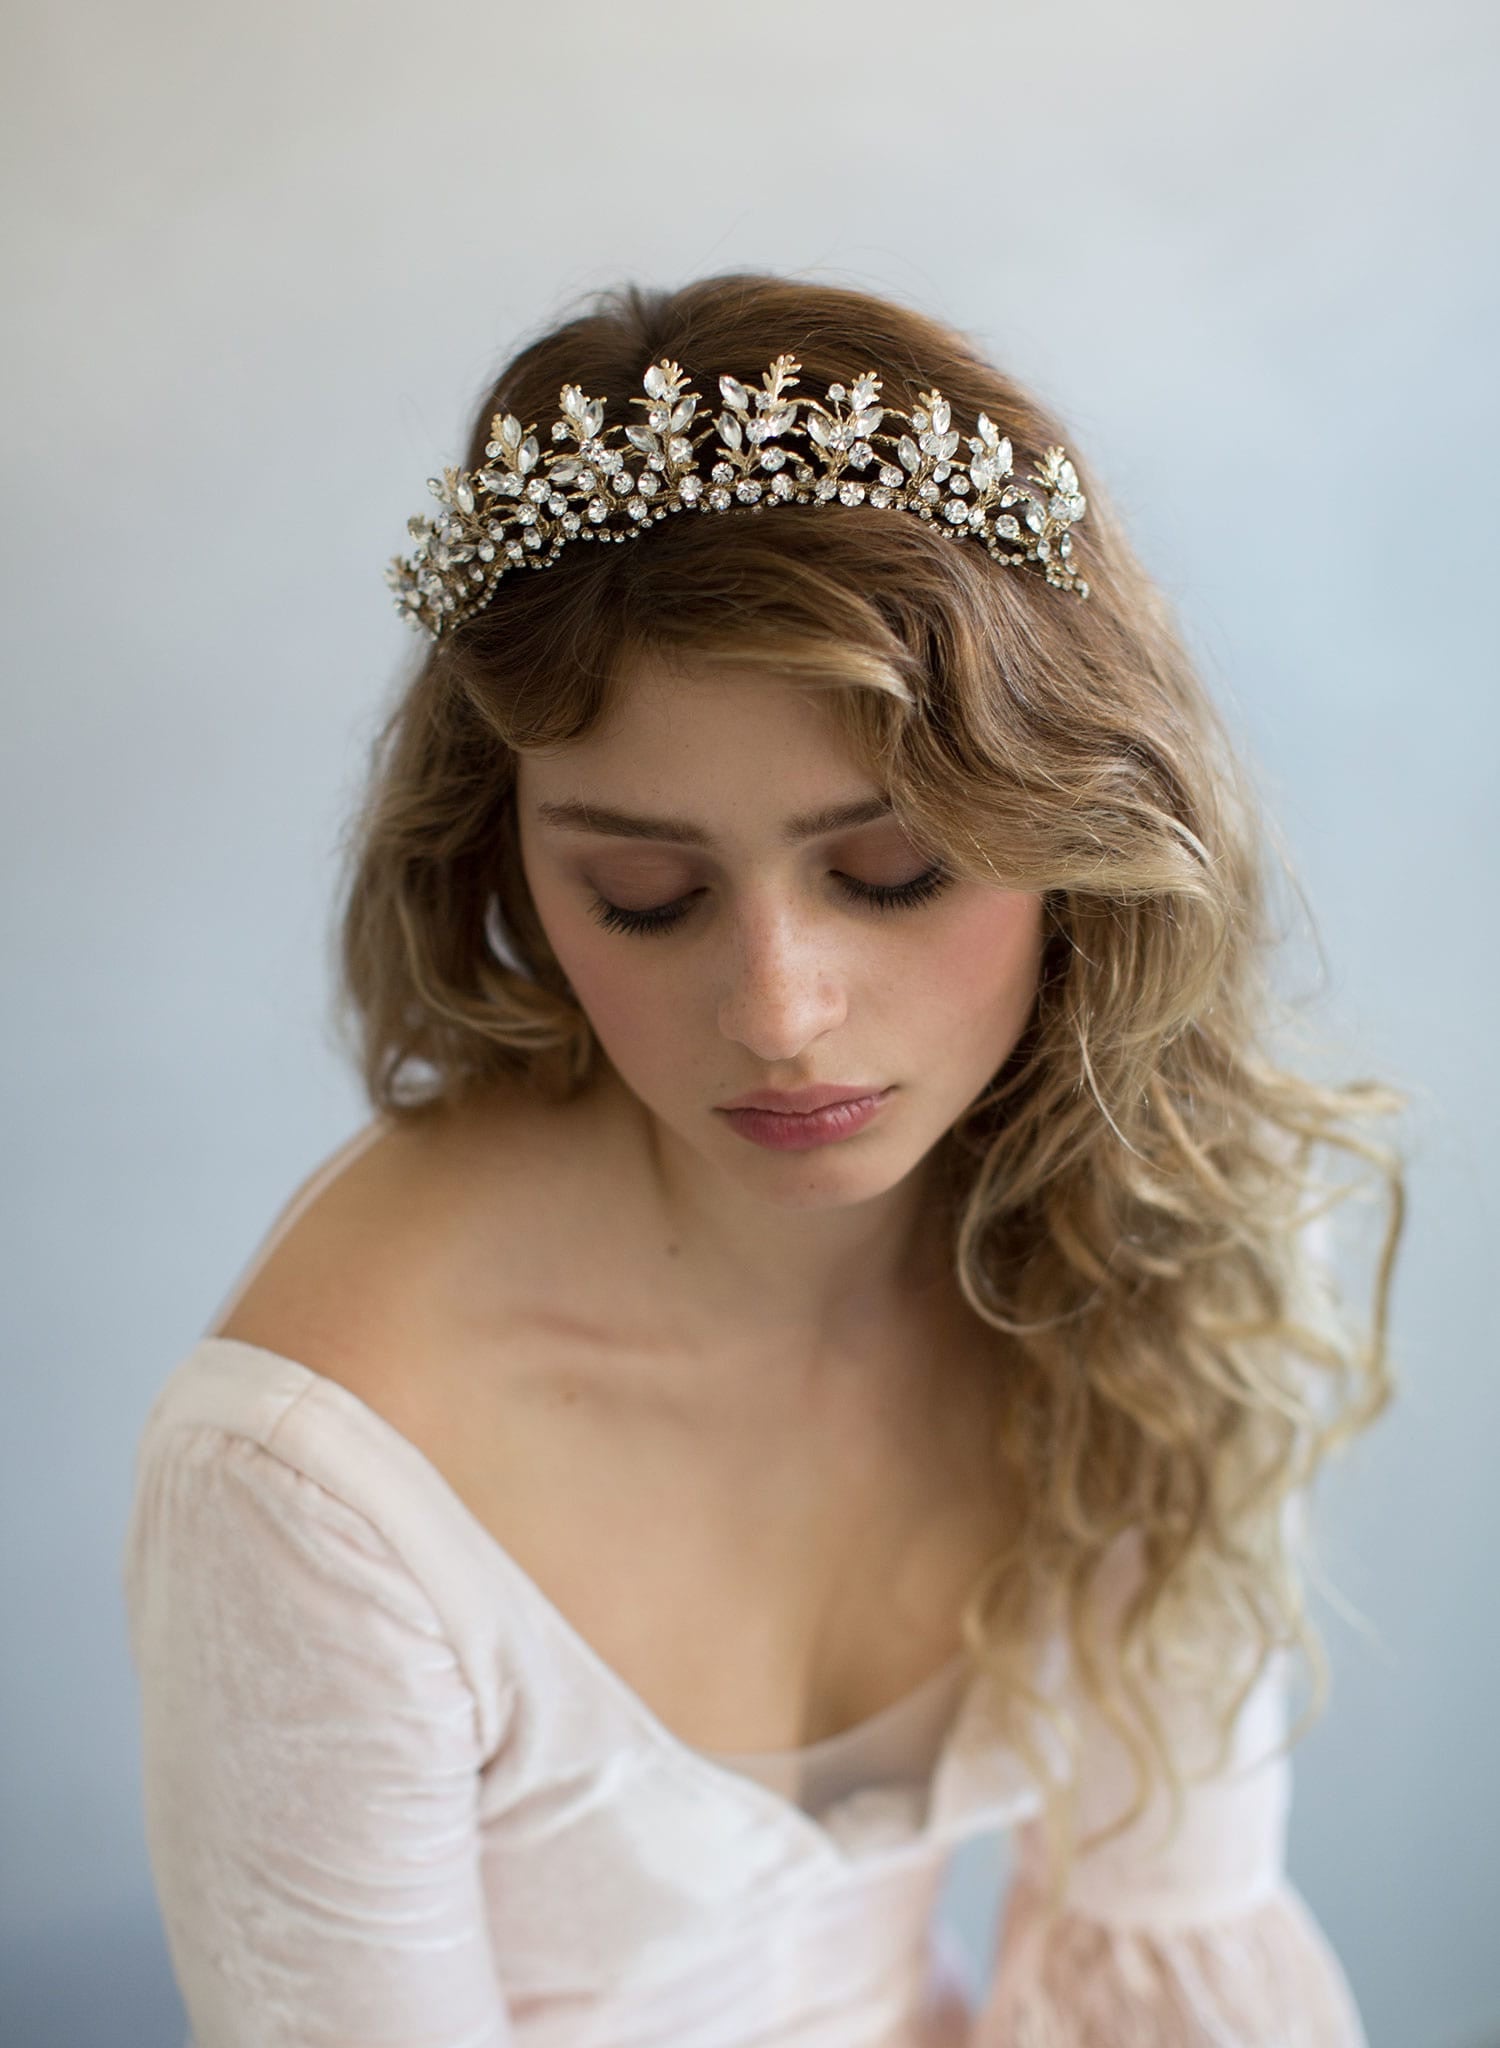 Bridal tiara - Fern charm and navette crystal tiara crown 